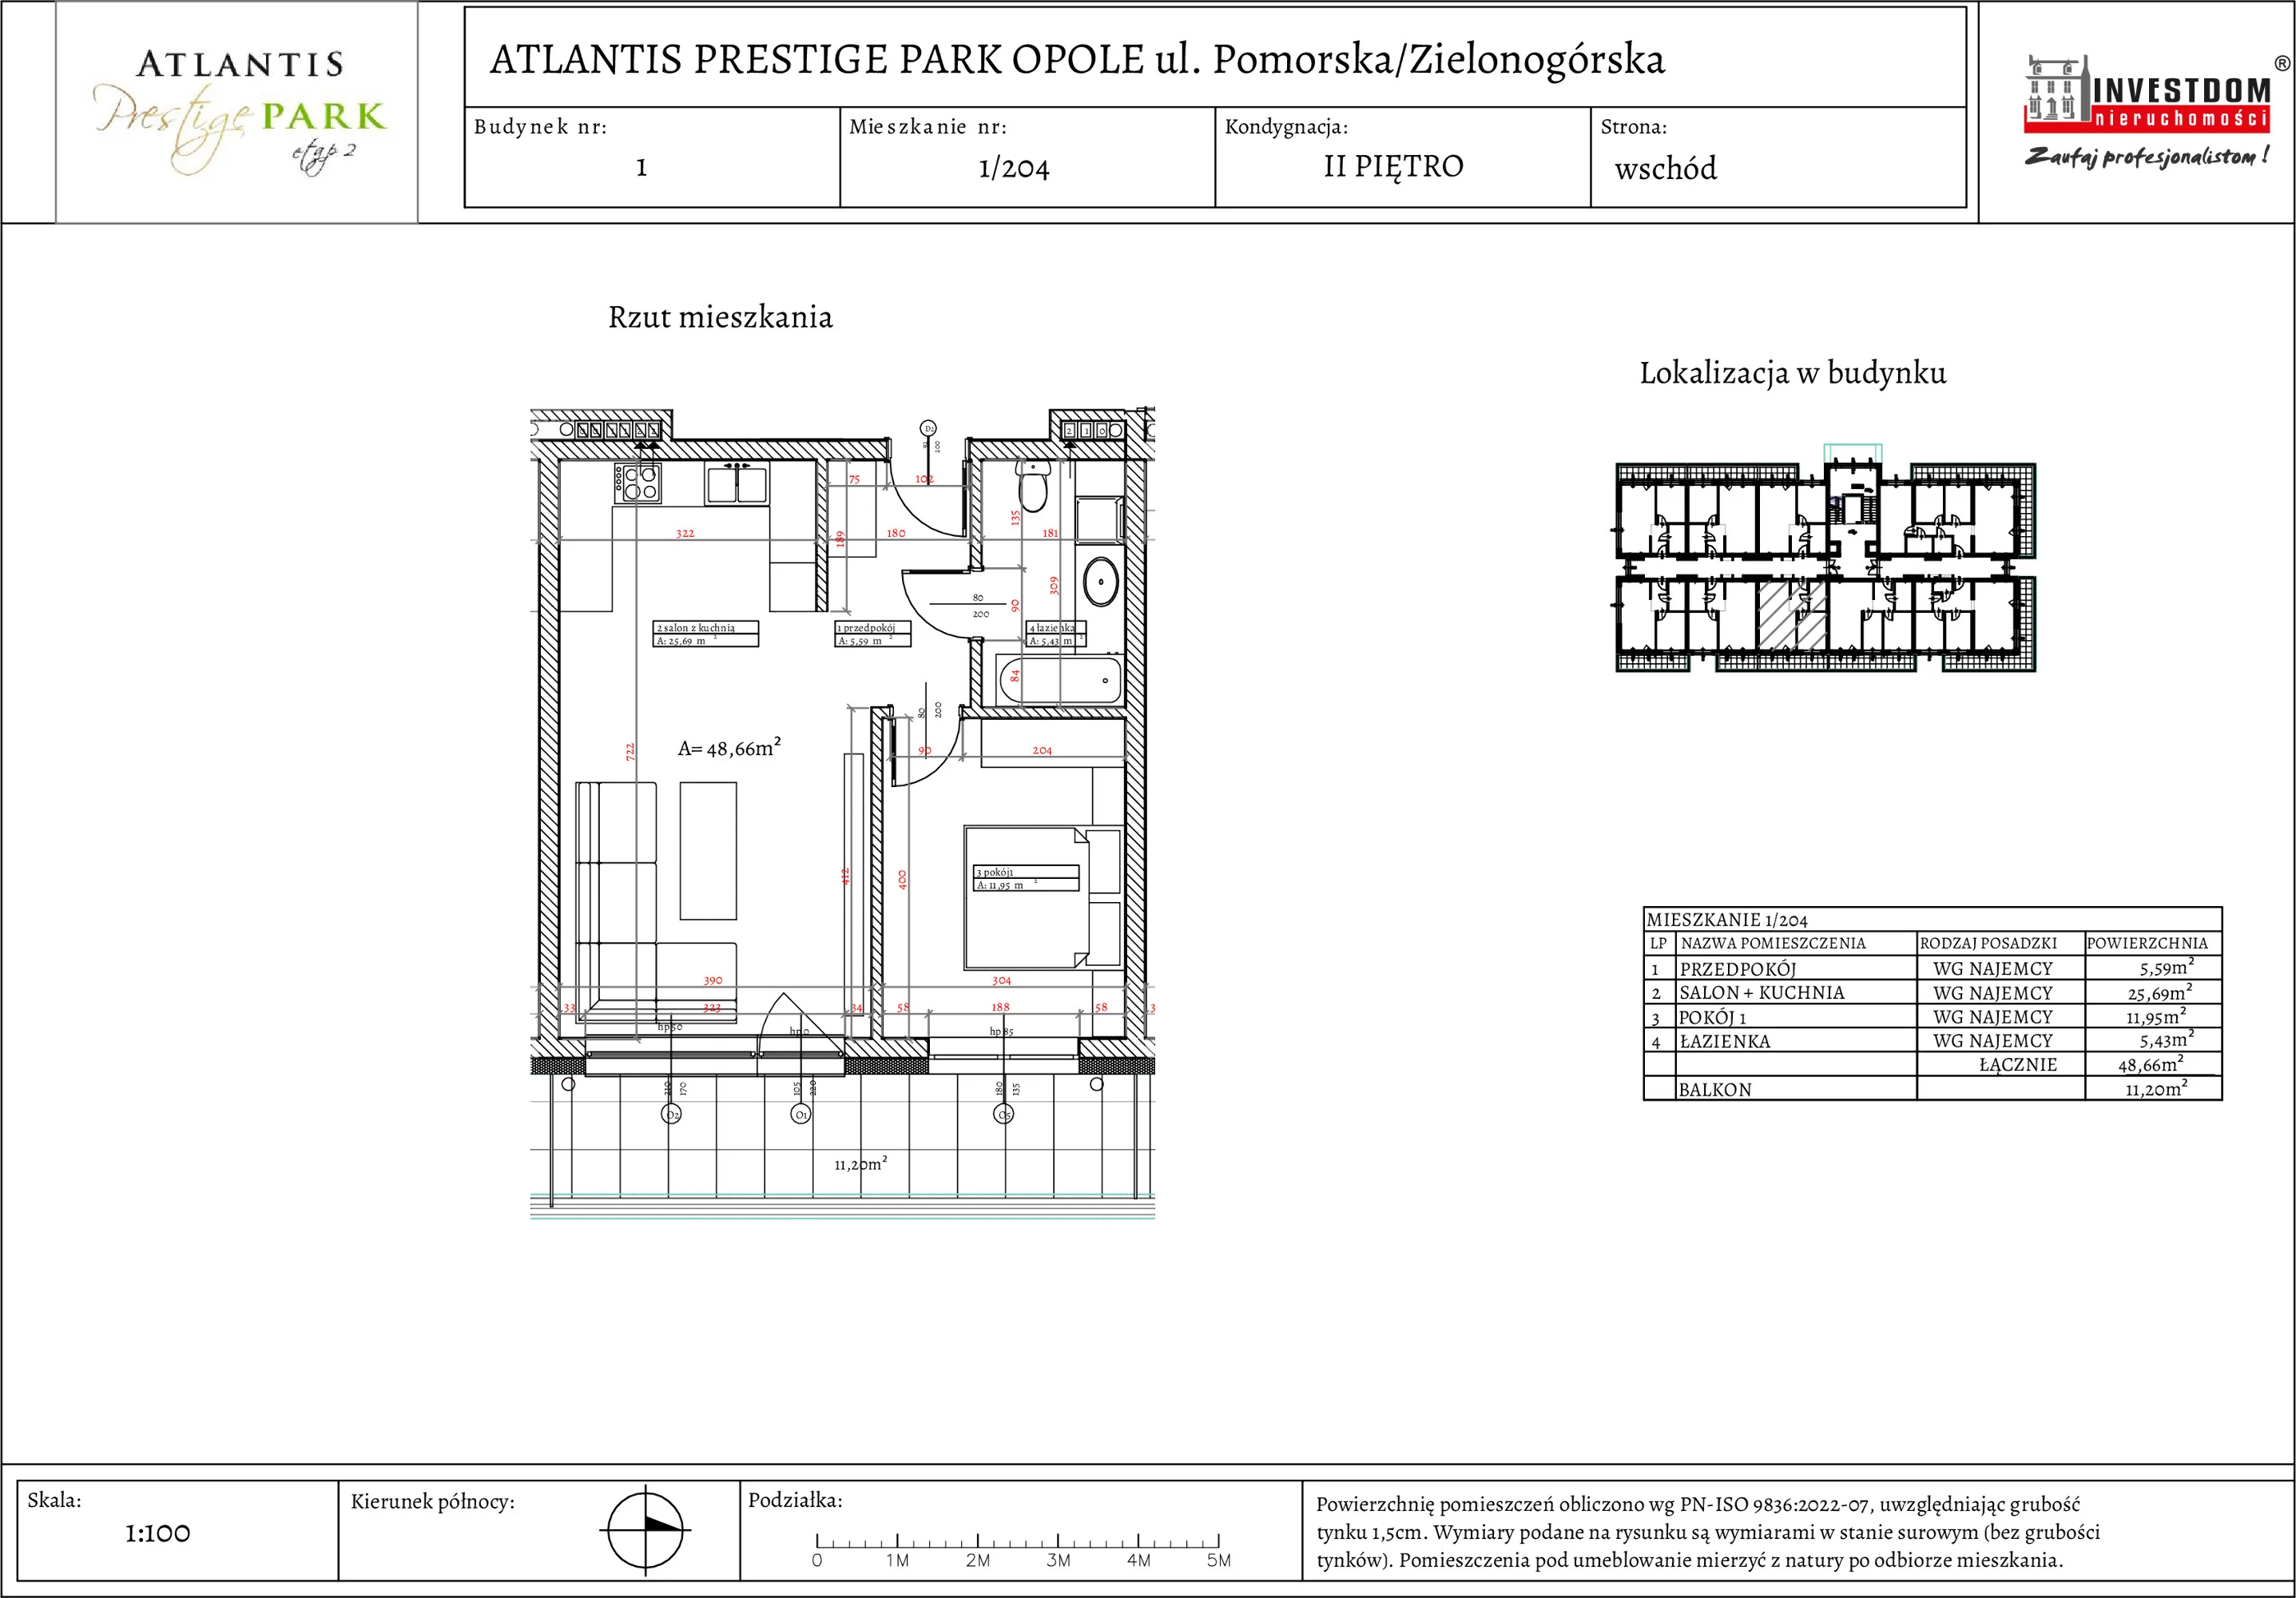 Apartament 48,66 m², piętro 2, oferta nr 1/204, Atlantis Prestige Park, Opole, Malinka, ul. Pomorska / Zielonogórska / Harcmistrza Kamińskiego